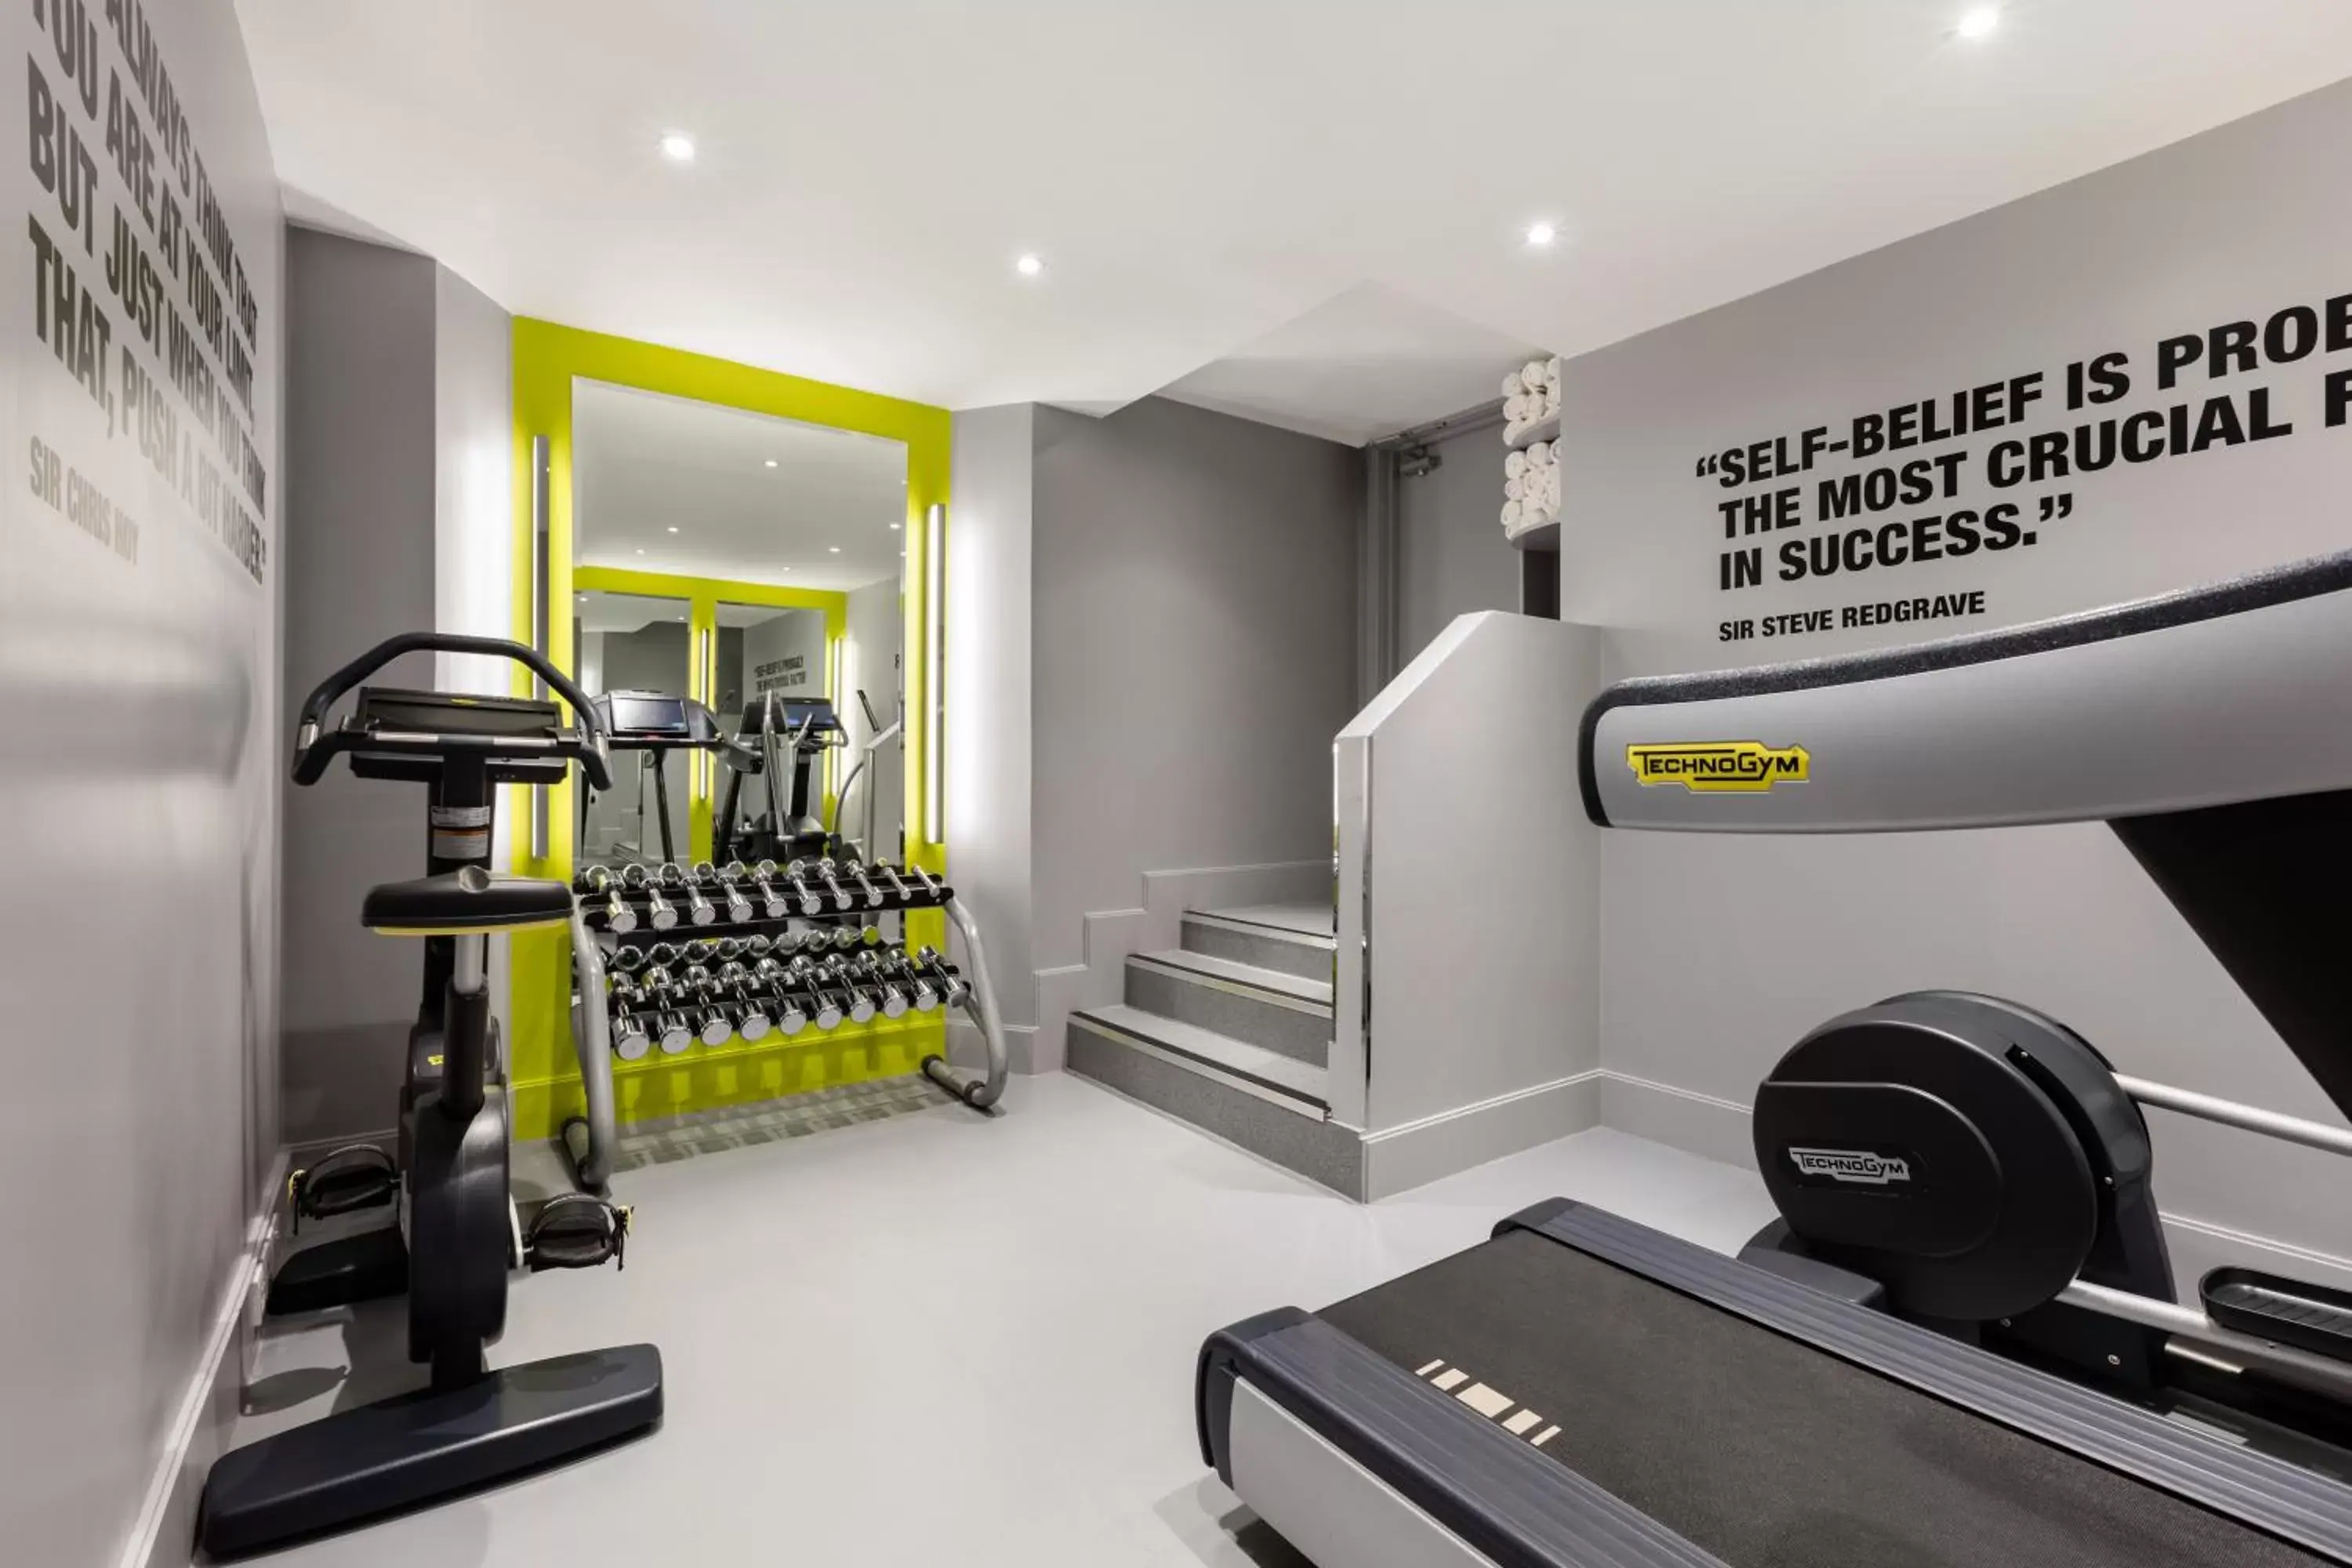 Fitness centre/facilities, Fitness Center/Facilities in Radisson Blu Edwardian Sussex Hotel, London